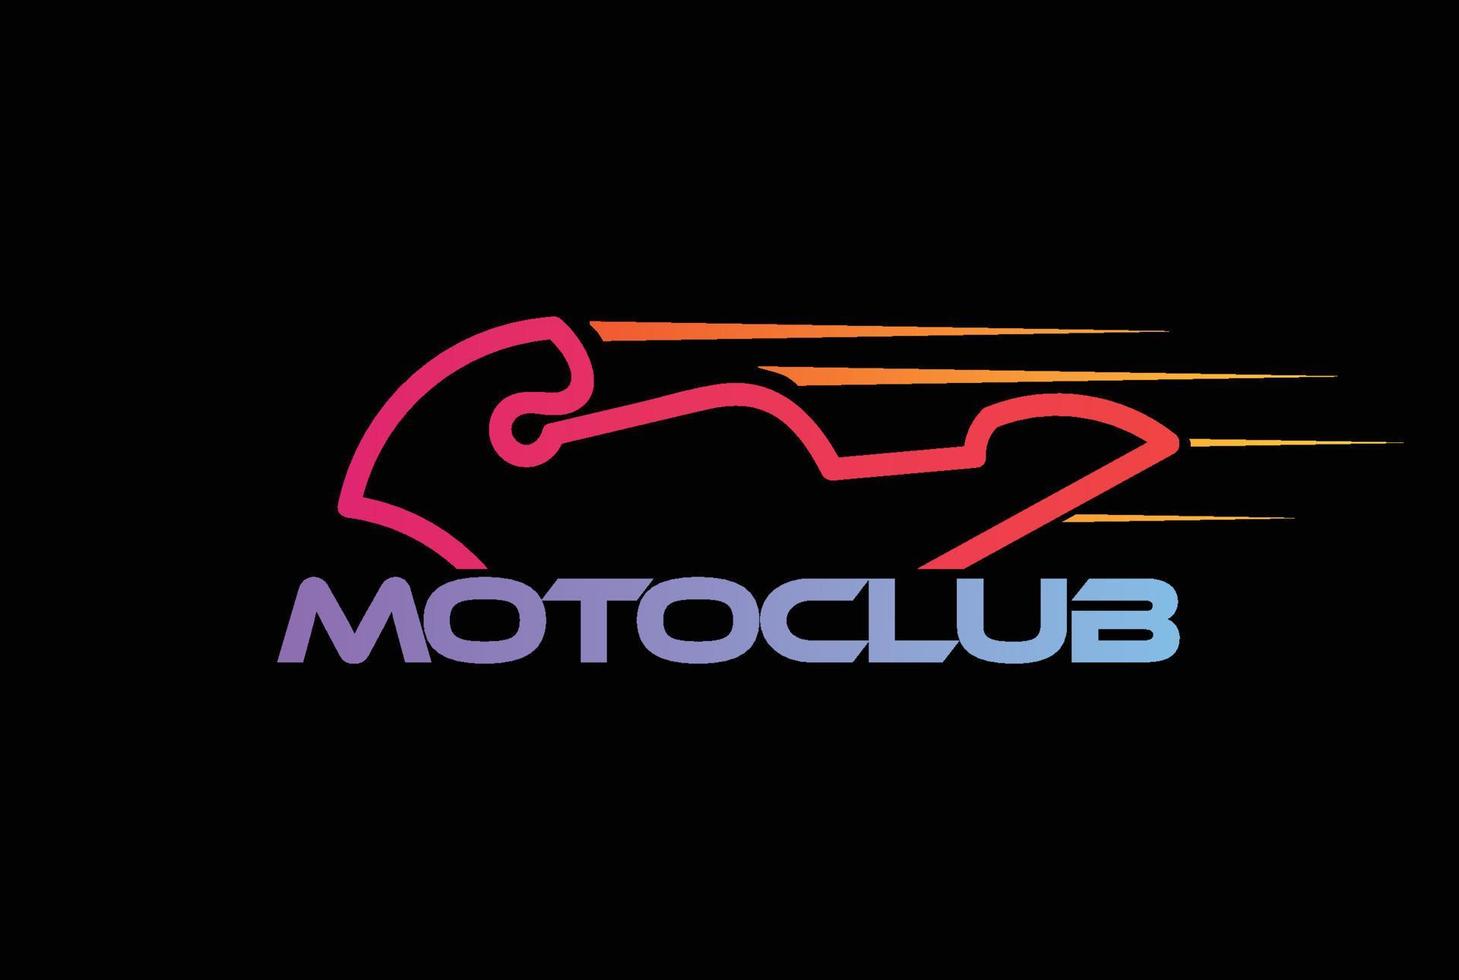 simples minimalista velozes Rapidez corrida bicicleta motocicleta esporte clube concorrência logotipo Projeto vetor